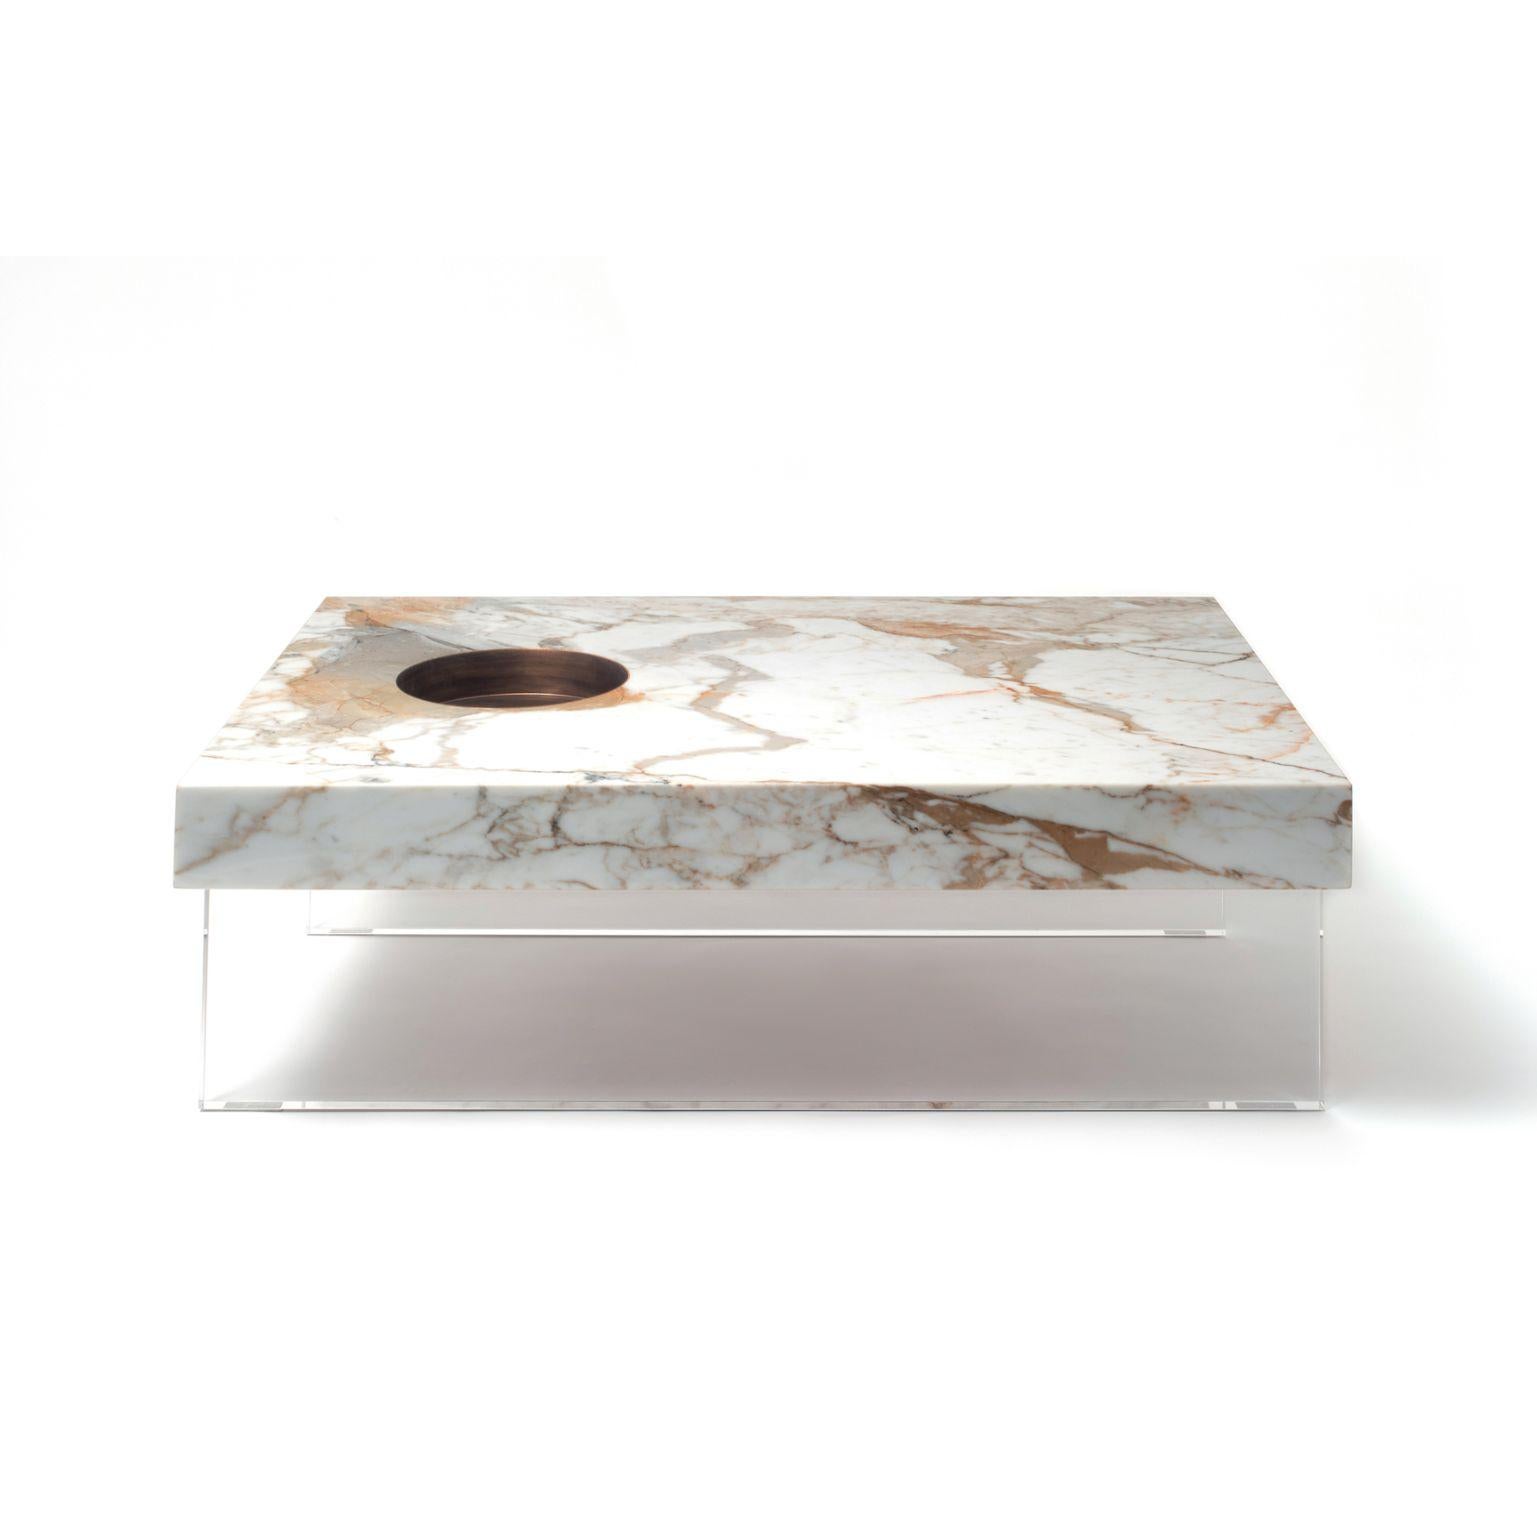 Scoop plexiglass table large by Stefano Belingardi Clusoni
Dimensions: 100 x 70 x 36 cm
Materials: Calacatta oro, brass, wood, plexiglass

